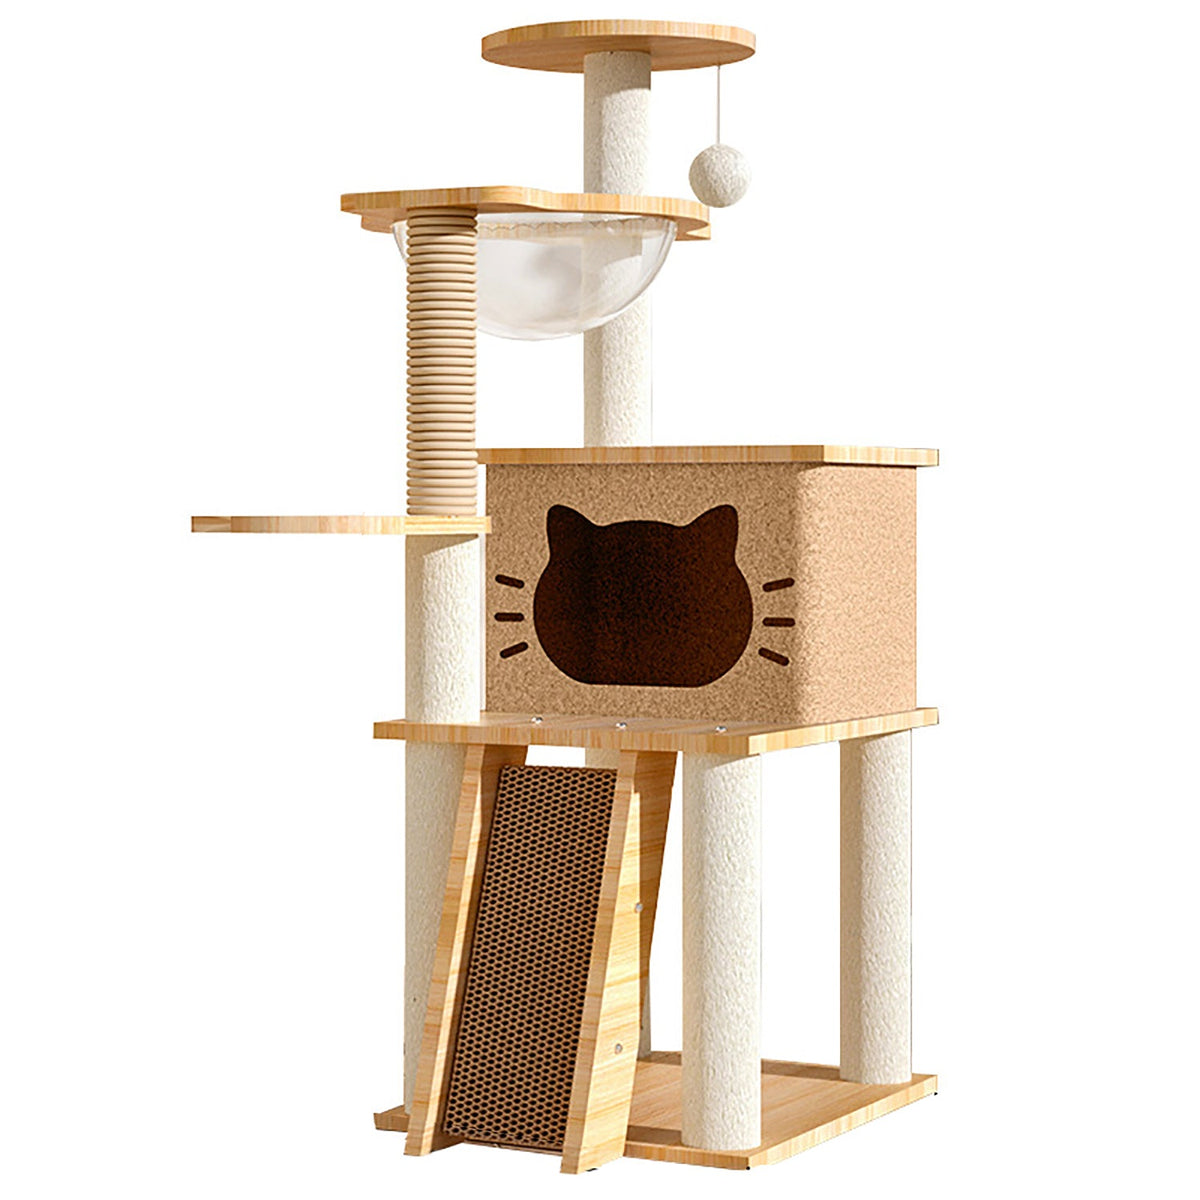 Cat Scratcher Bed Tower with Hammock Climbing Flower Tree Condo Ladder 120cm(Light Coffee)